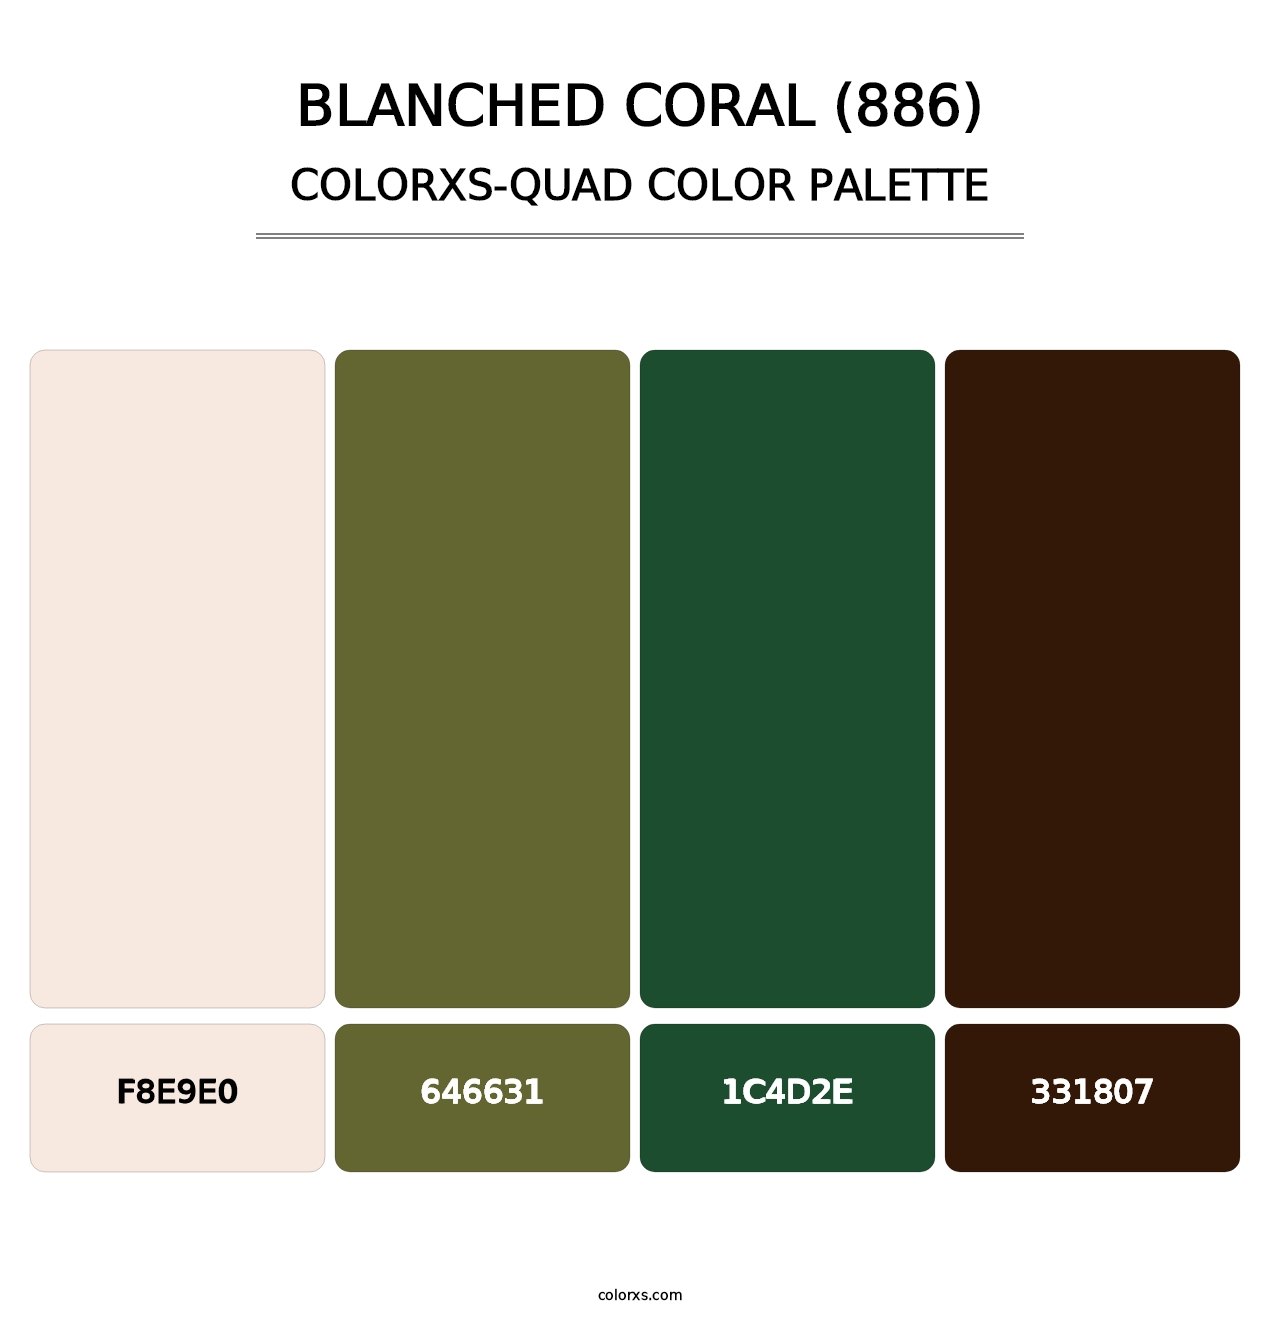 Blanched Coral (886) - Colorxs Quad Palette